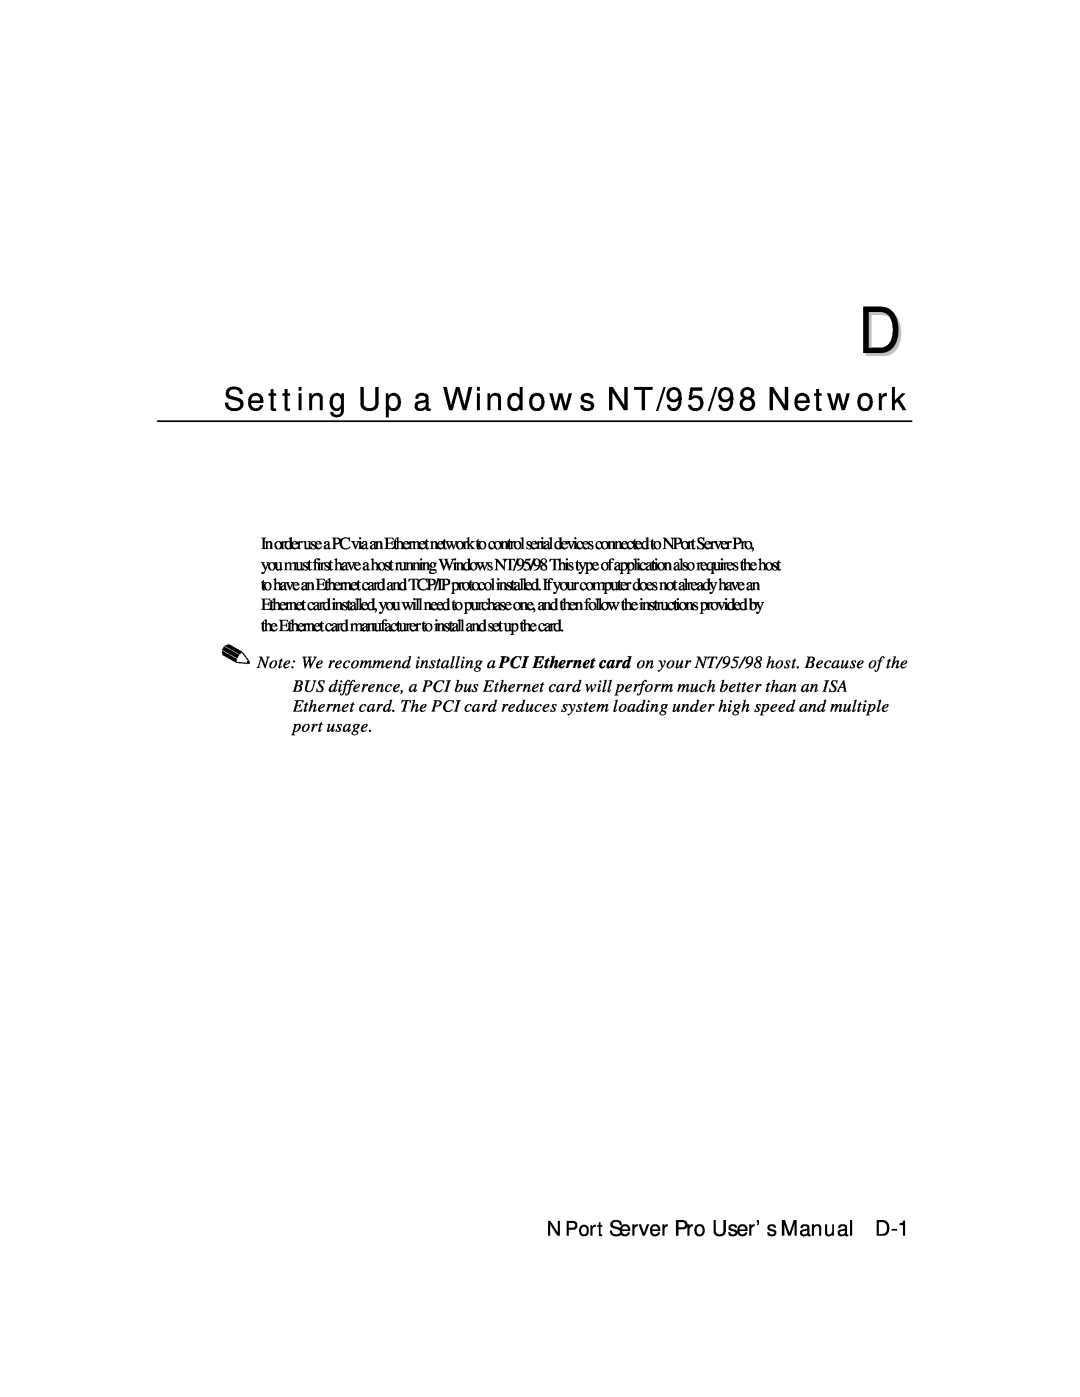 Moxa Technologies DE-308, DE-303 manual NPort Server Pro User’s Manual D-1, Setting Up a Windows NT/95/98 Network 